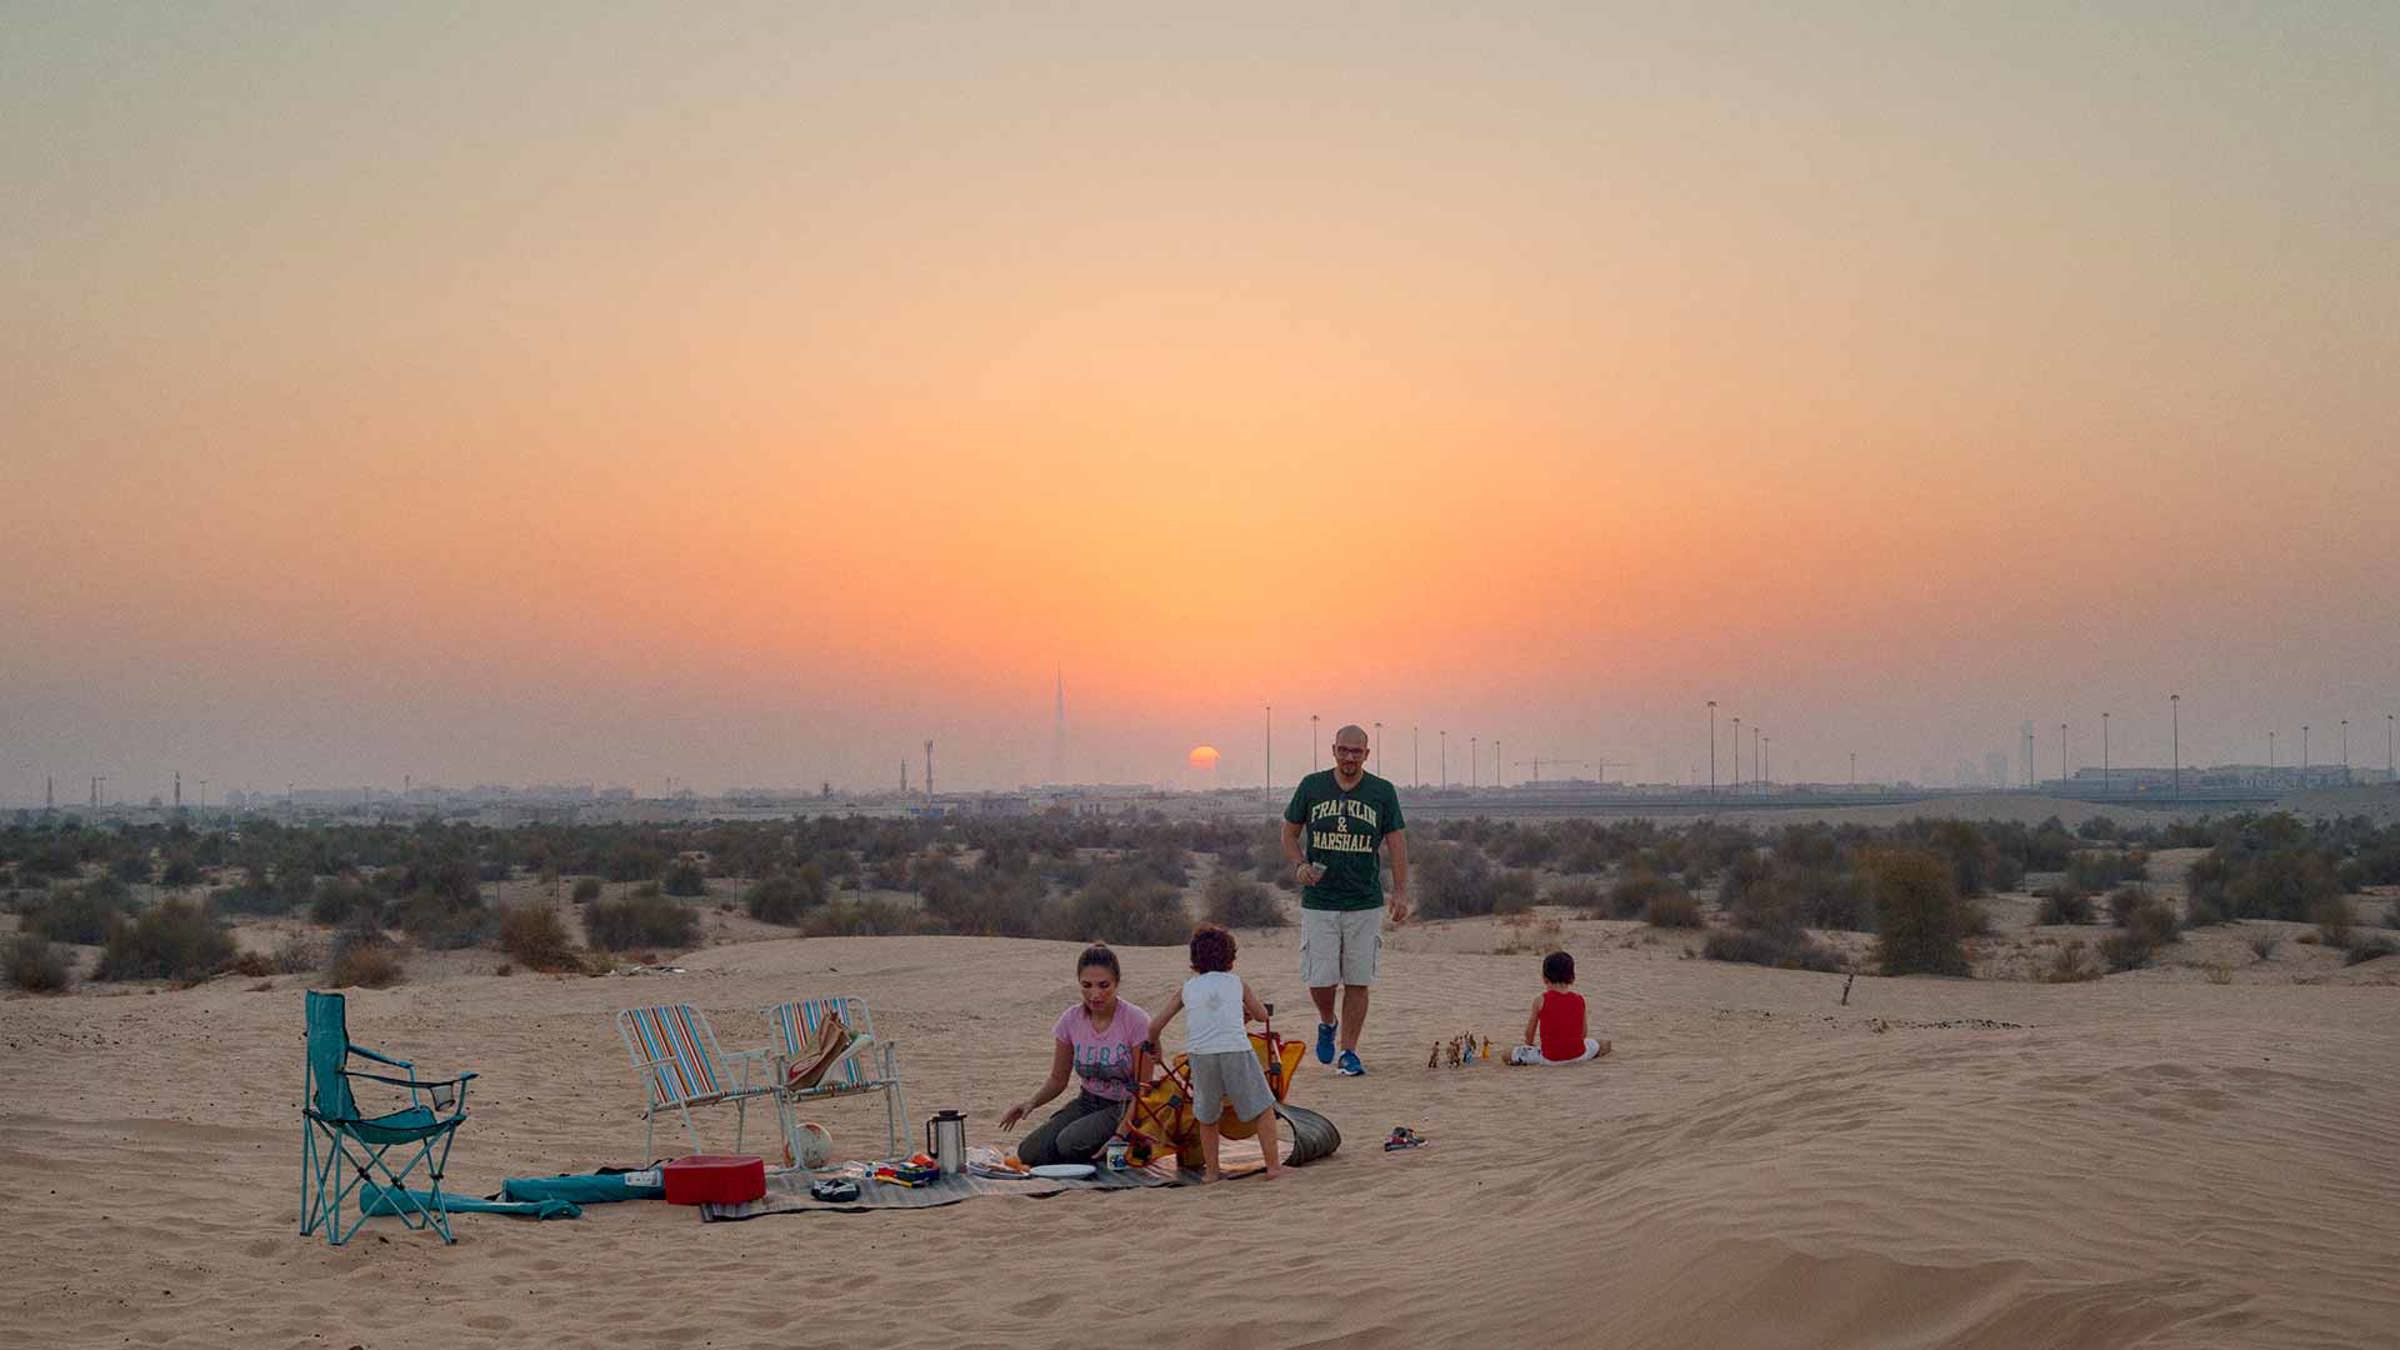 A family having a picnic in a desert